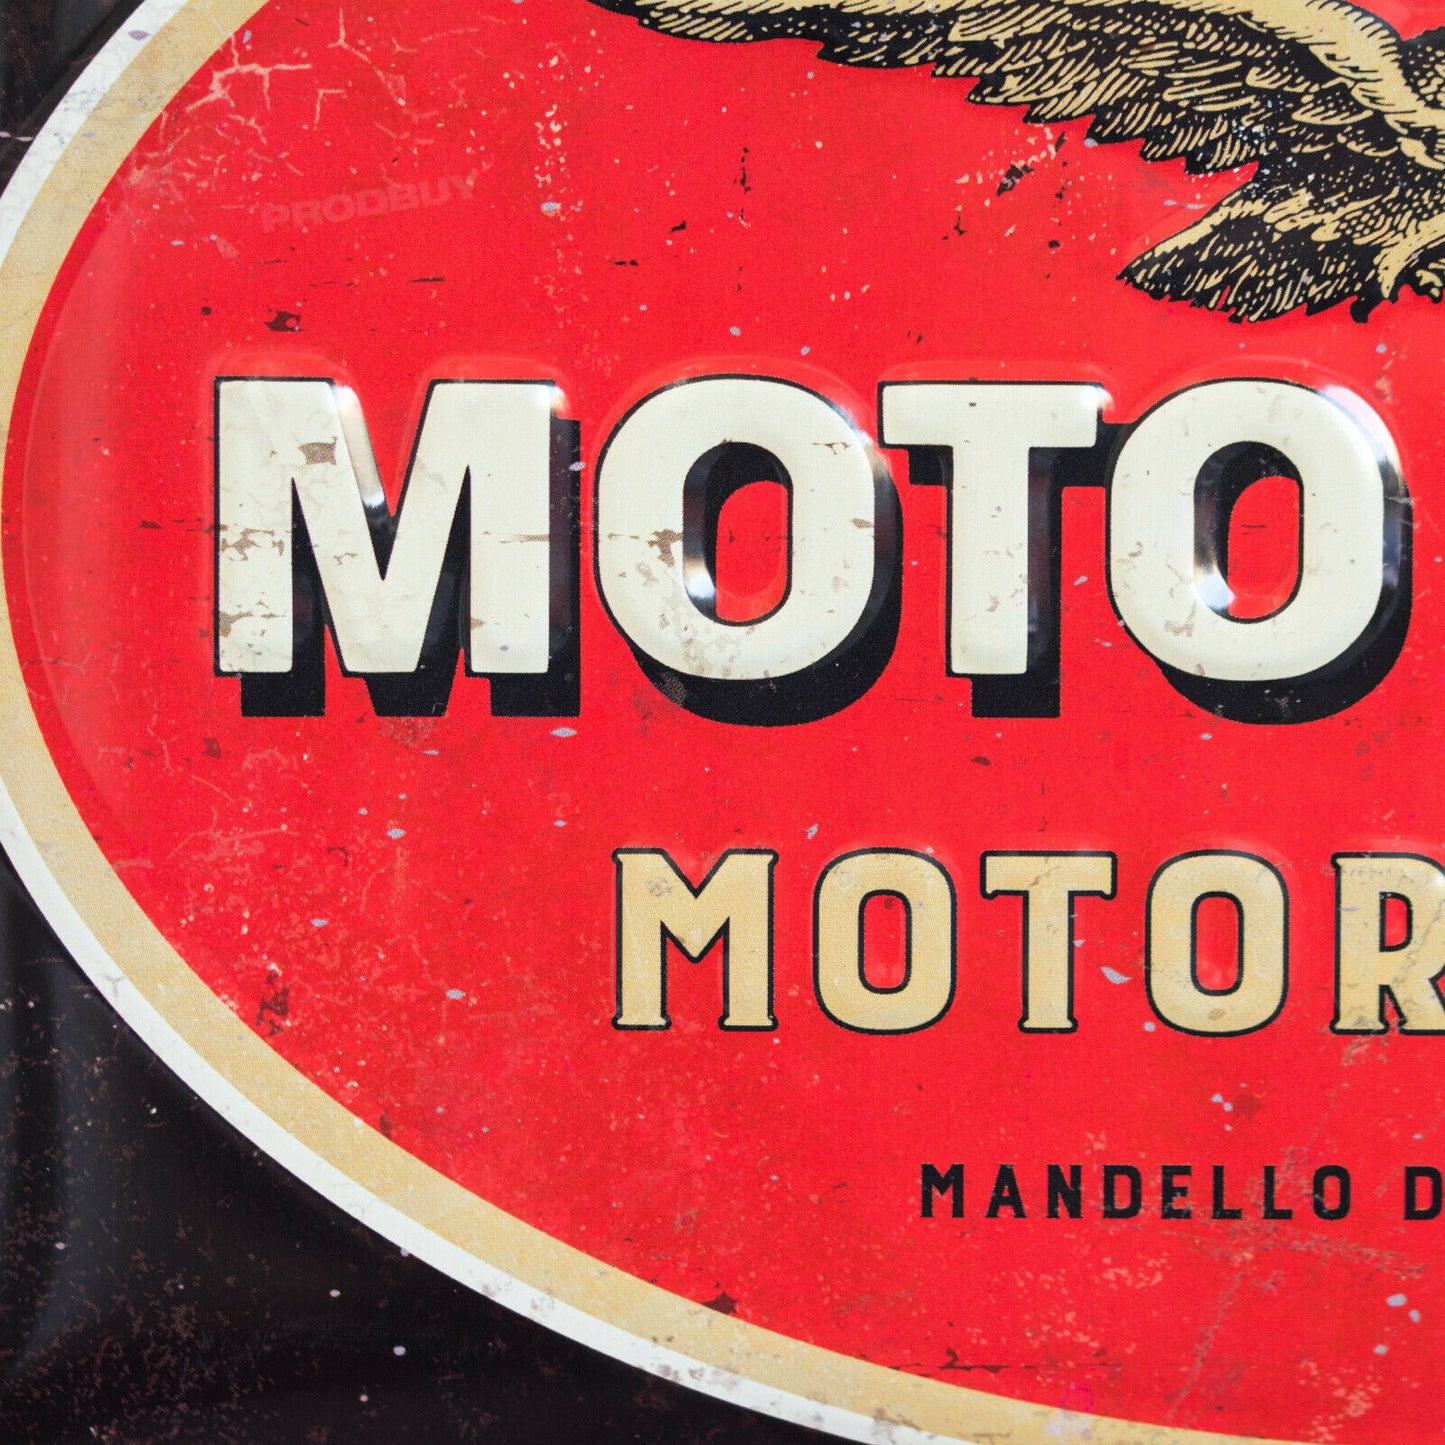 'Moto Guzzi Motorcycles' 30cm Metal Wall Sign